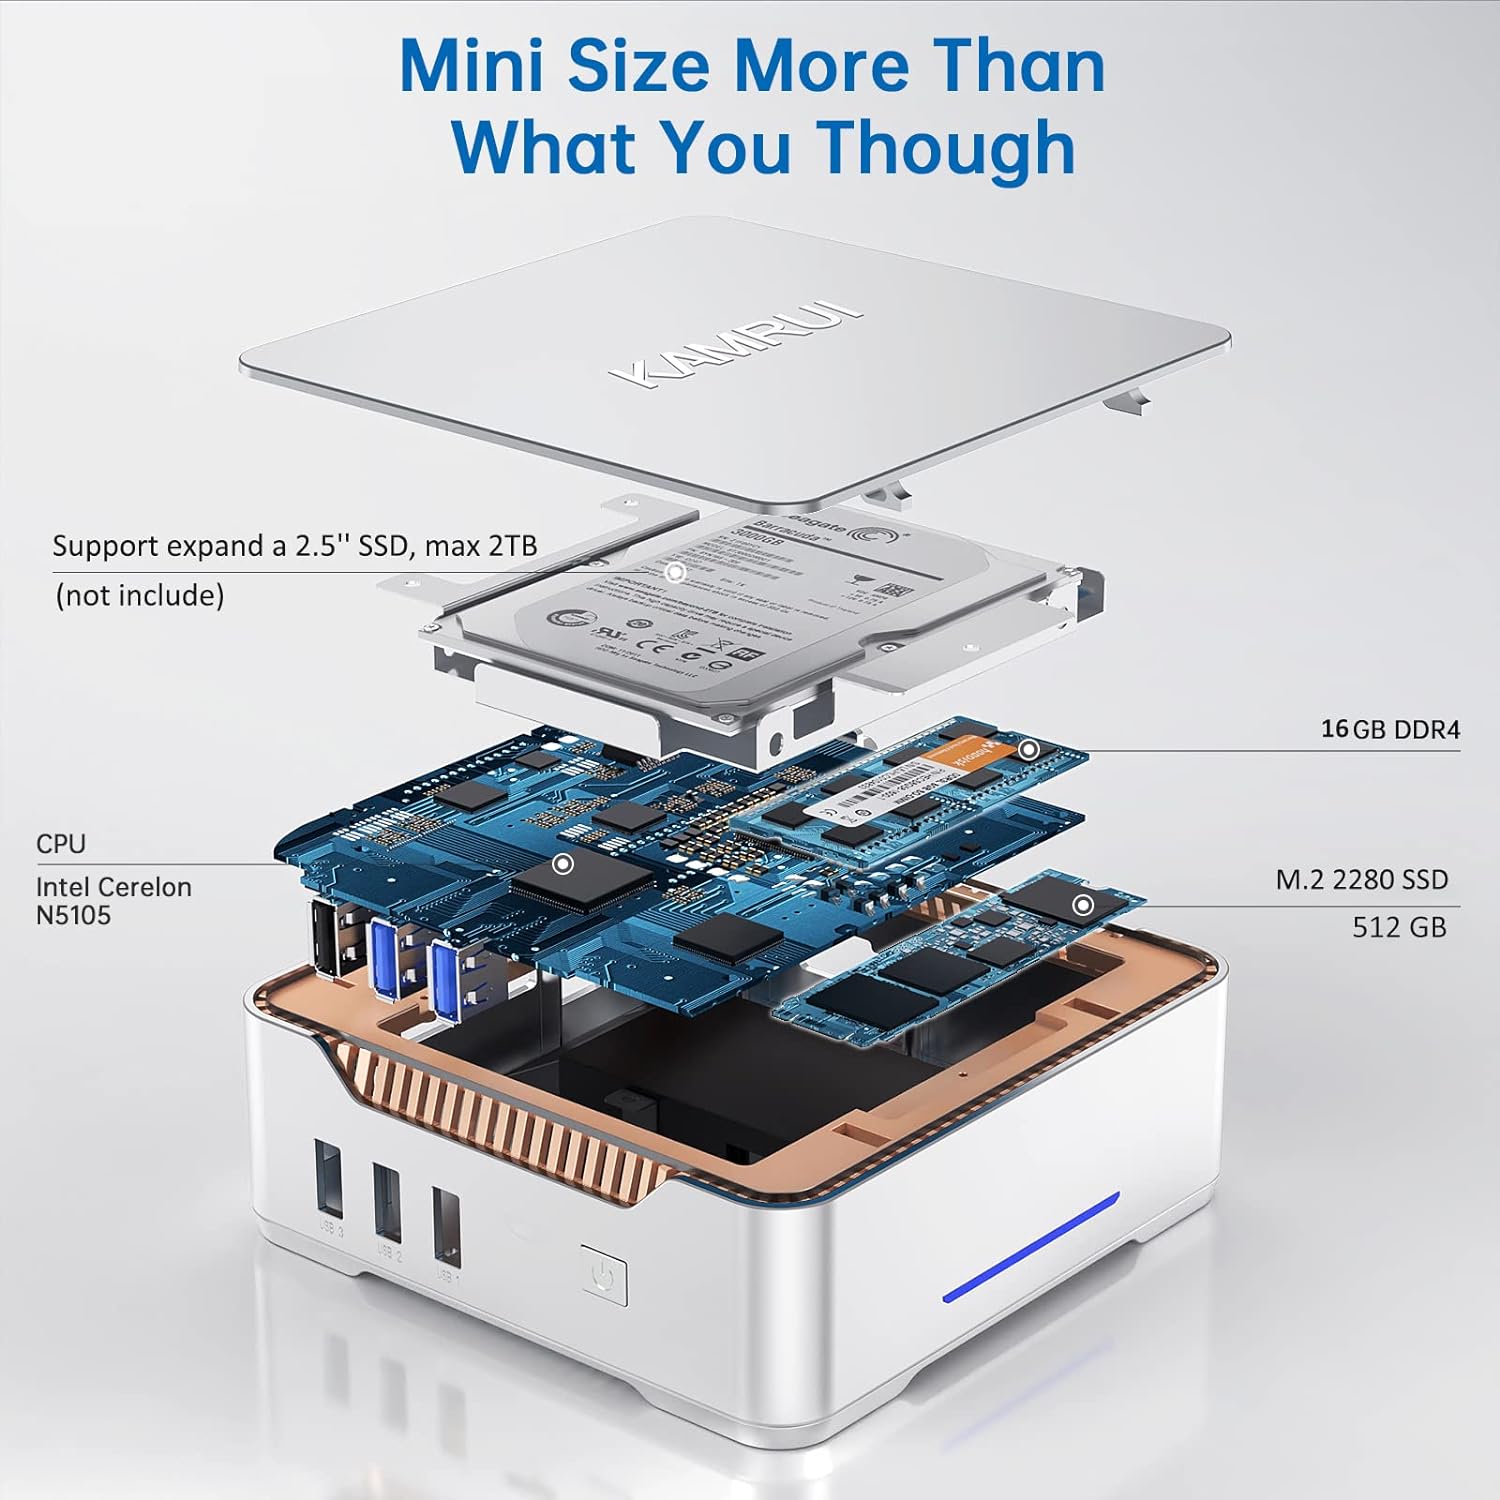 KAMRUI Mini PC,16GB RAM 512GB SSD Intel 11th Celeron N5105 (up to 2.9GHz) Mini Desktop Computer, 2.4G/5G WiFi, BT4.2, Small Computer Support 4K UHD VESA Gigabit Ethernet for Home/Business